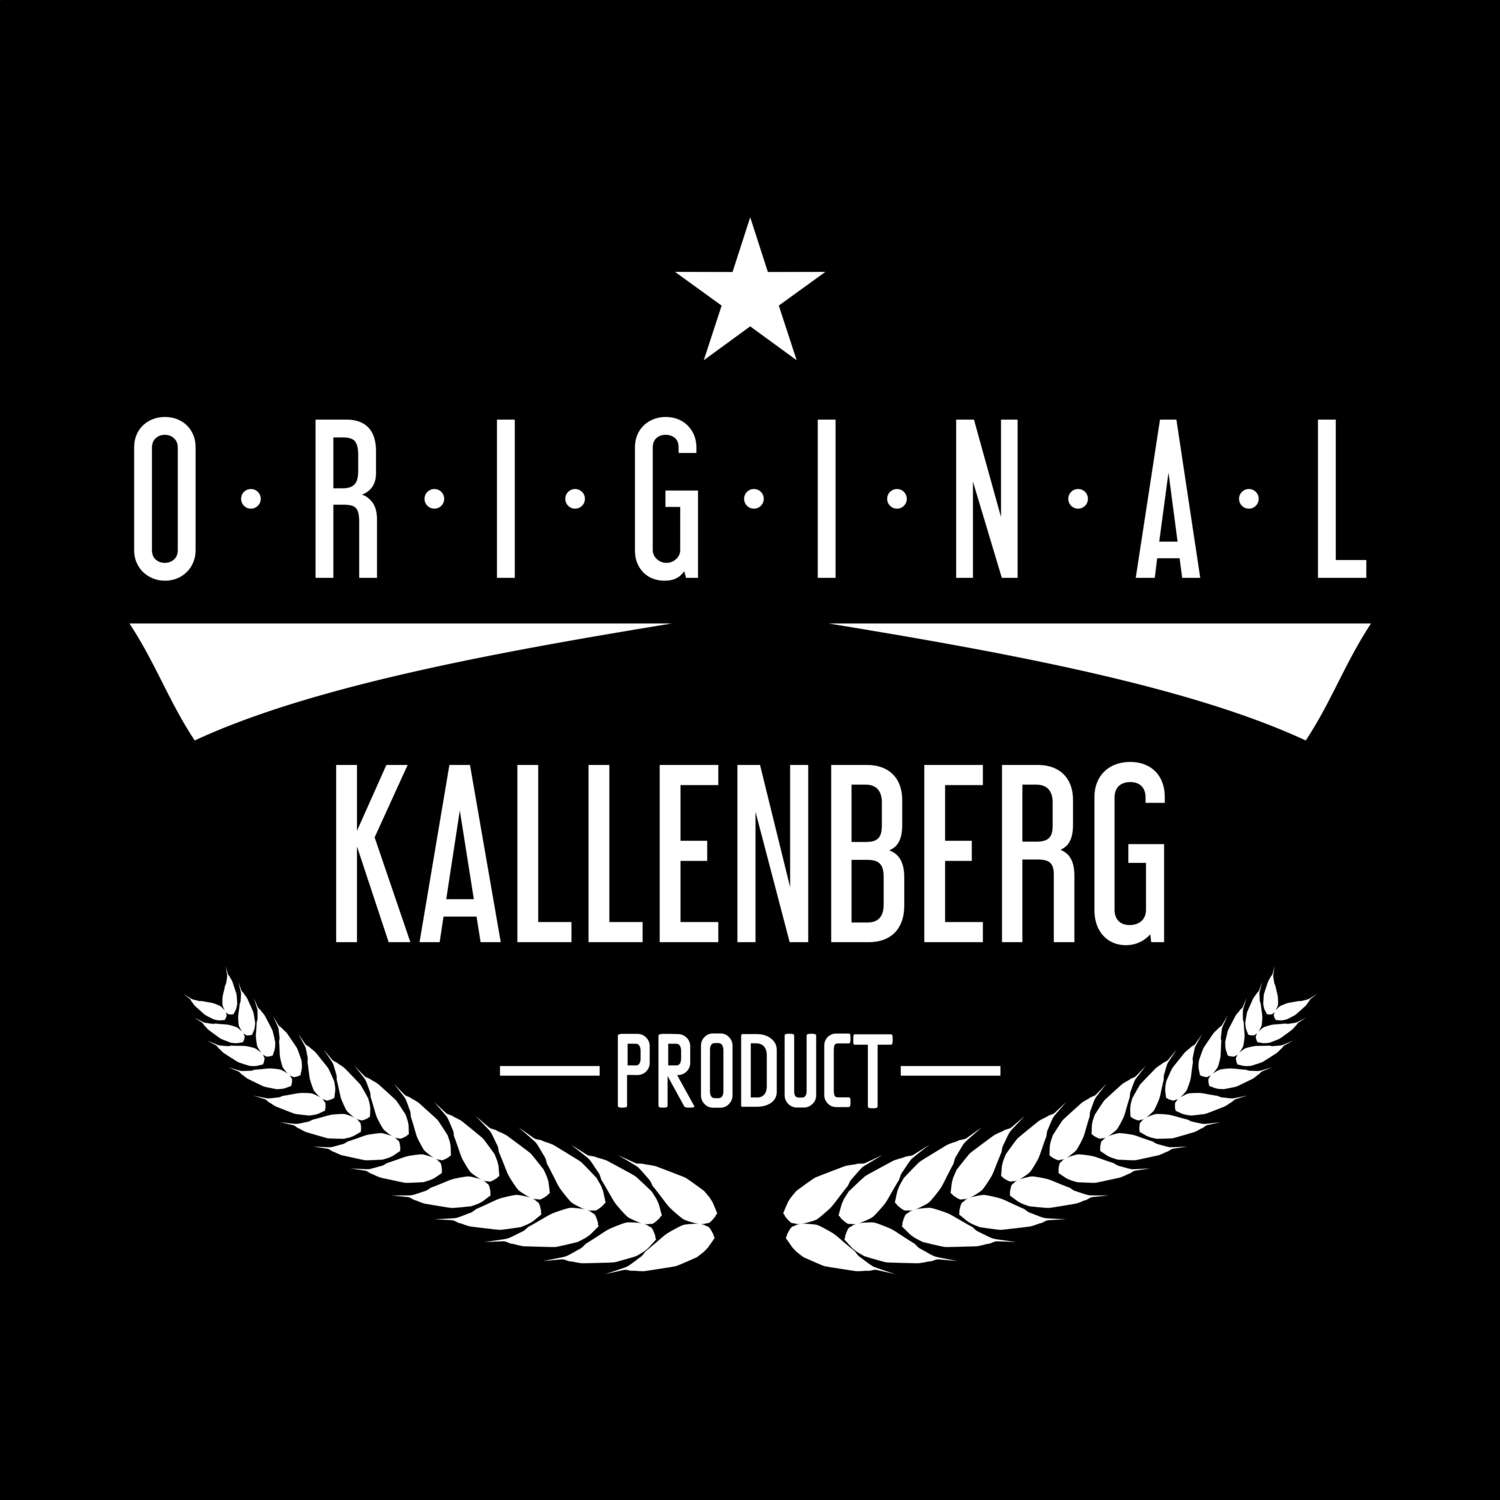 Kallenberg T-Shirt »Original Product«